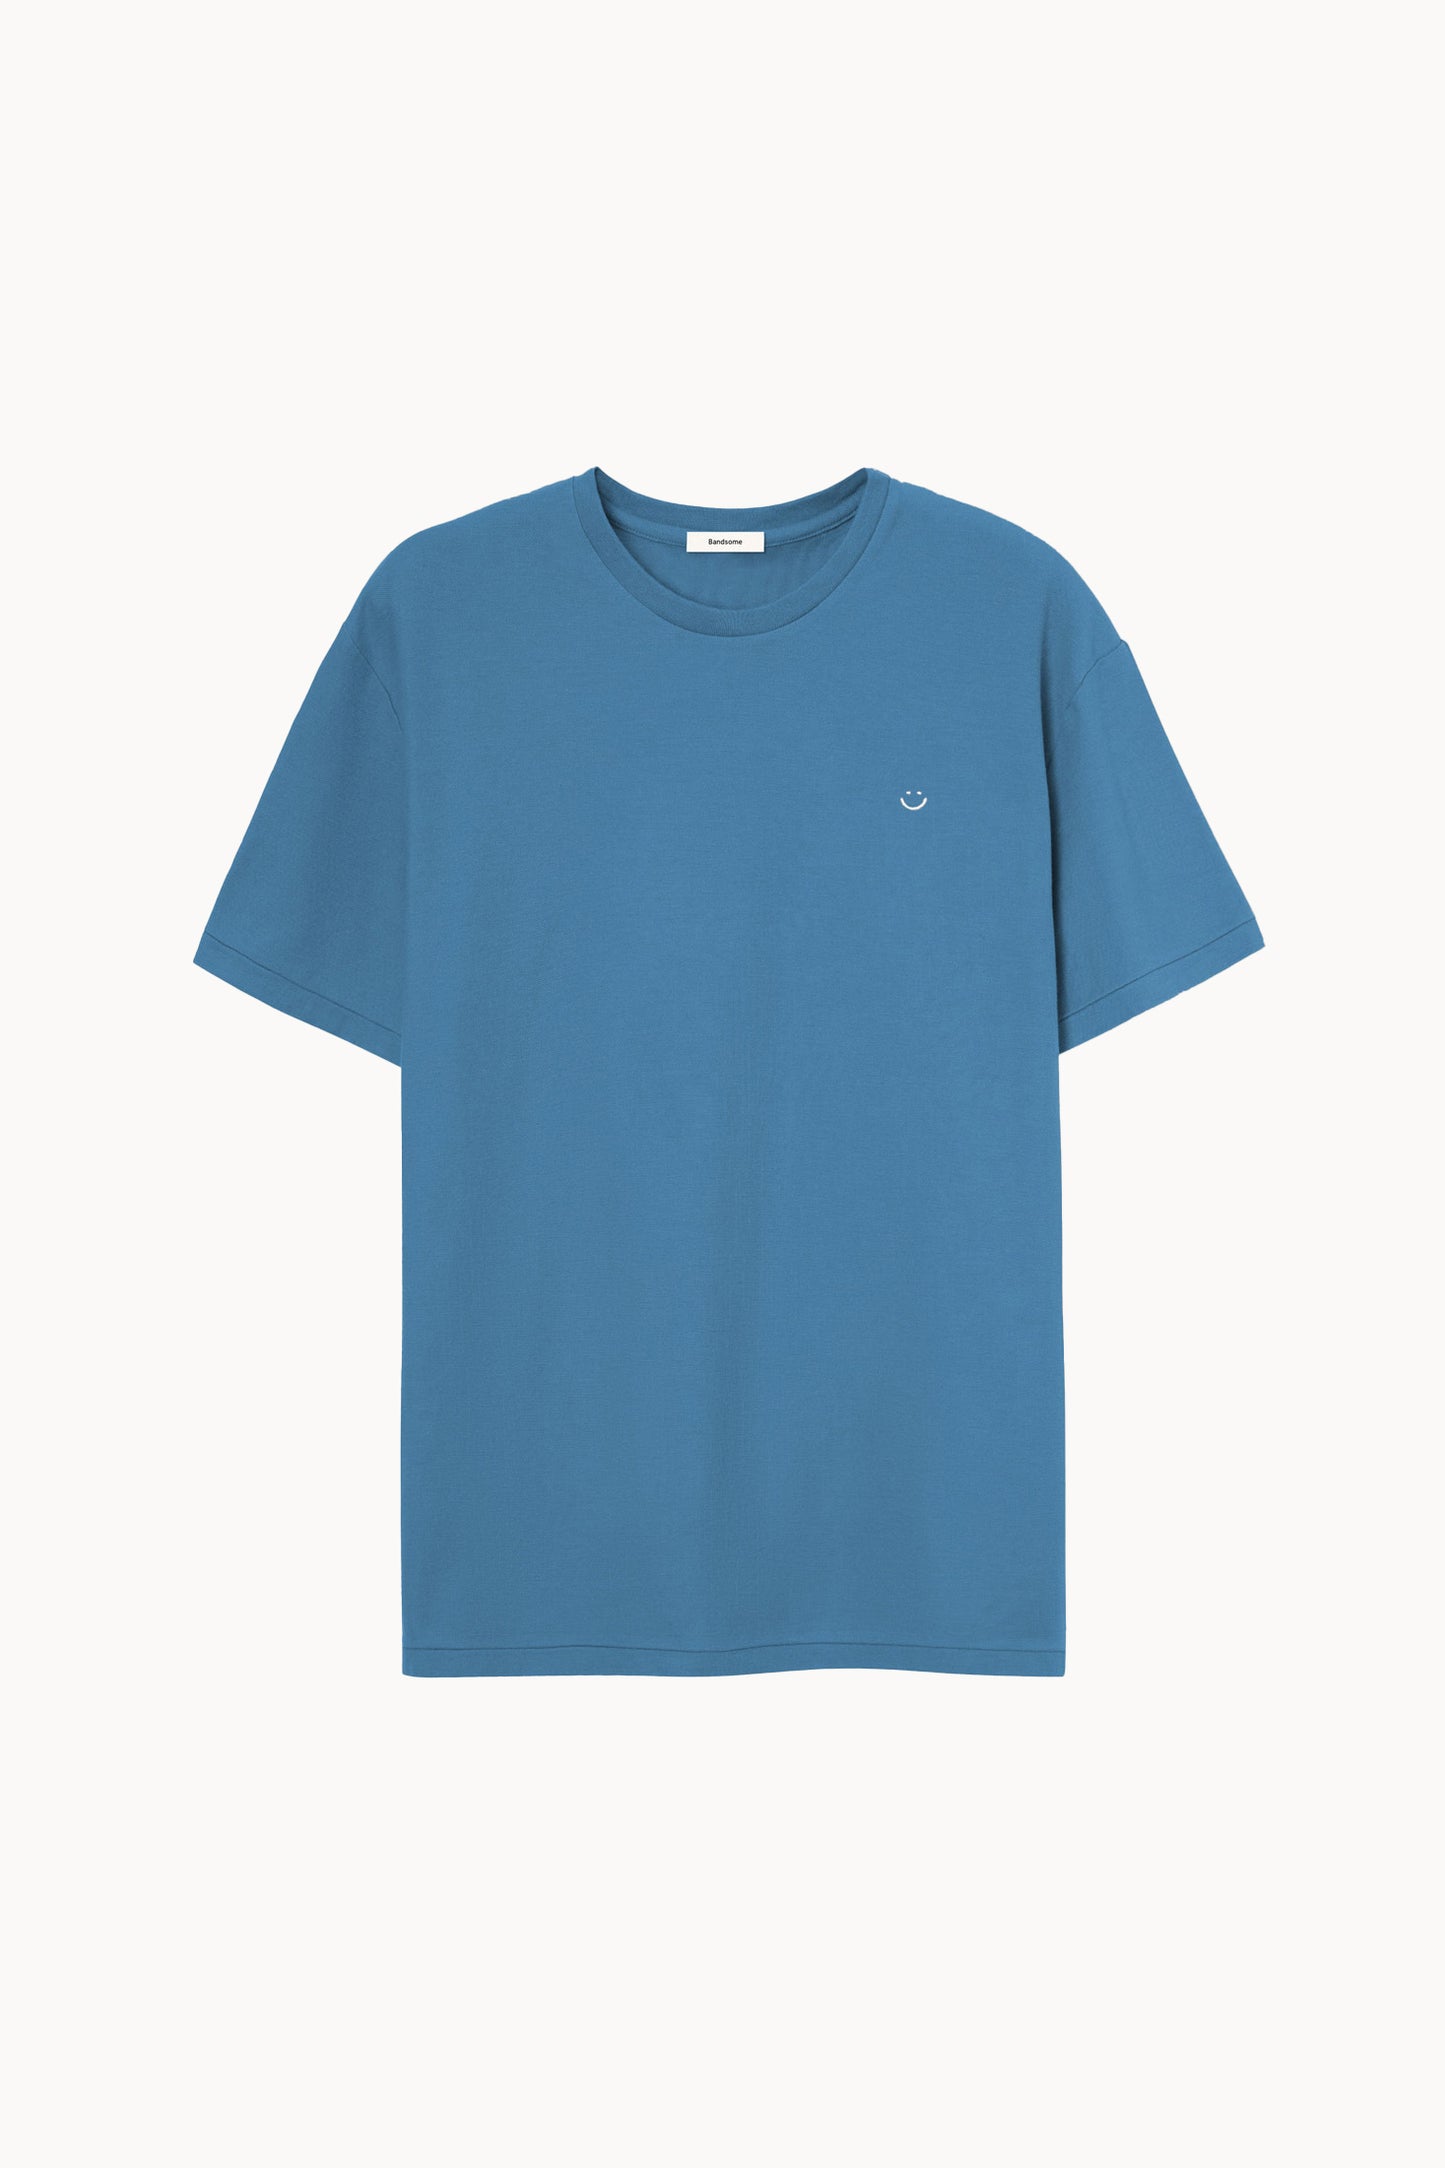 Pique T-Shirt Cobalt Smiley